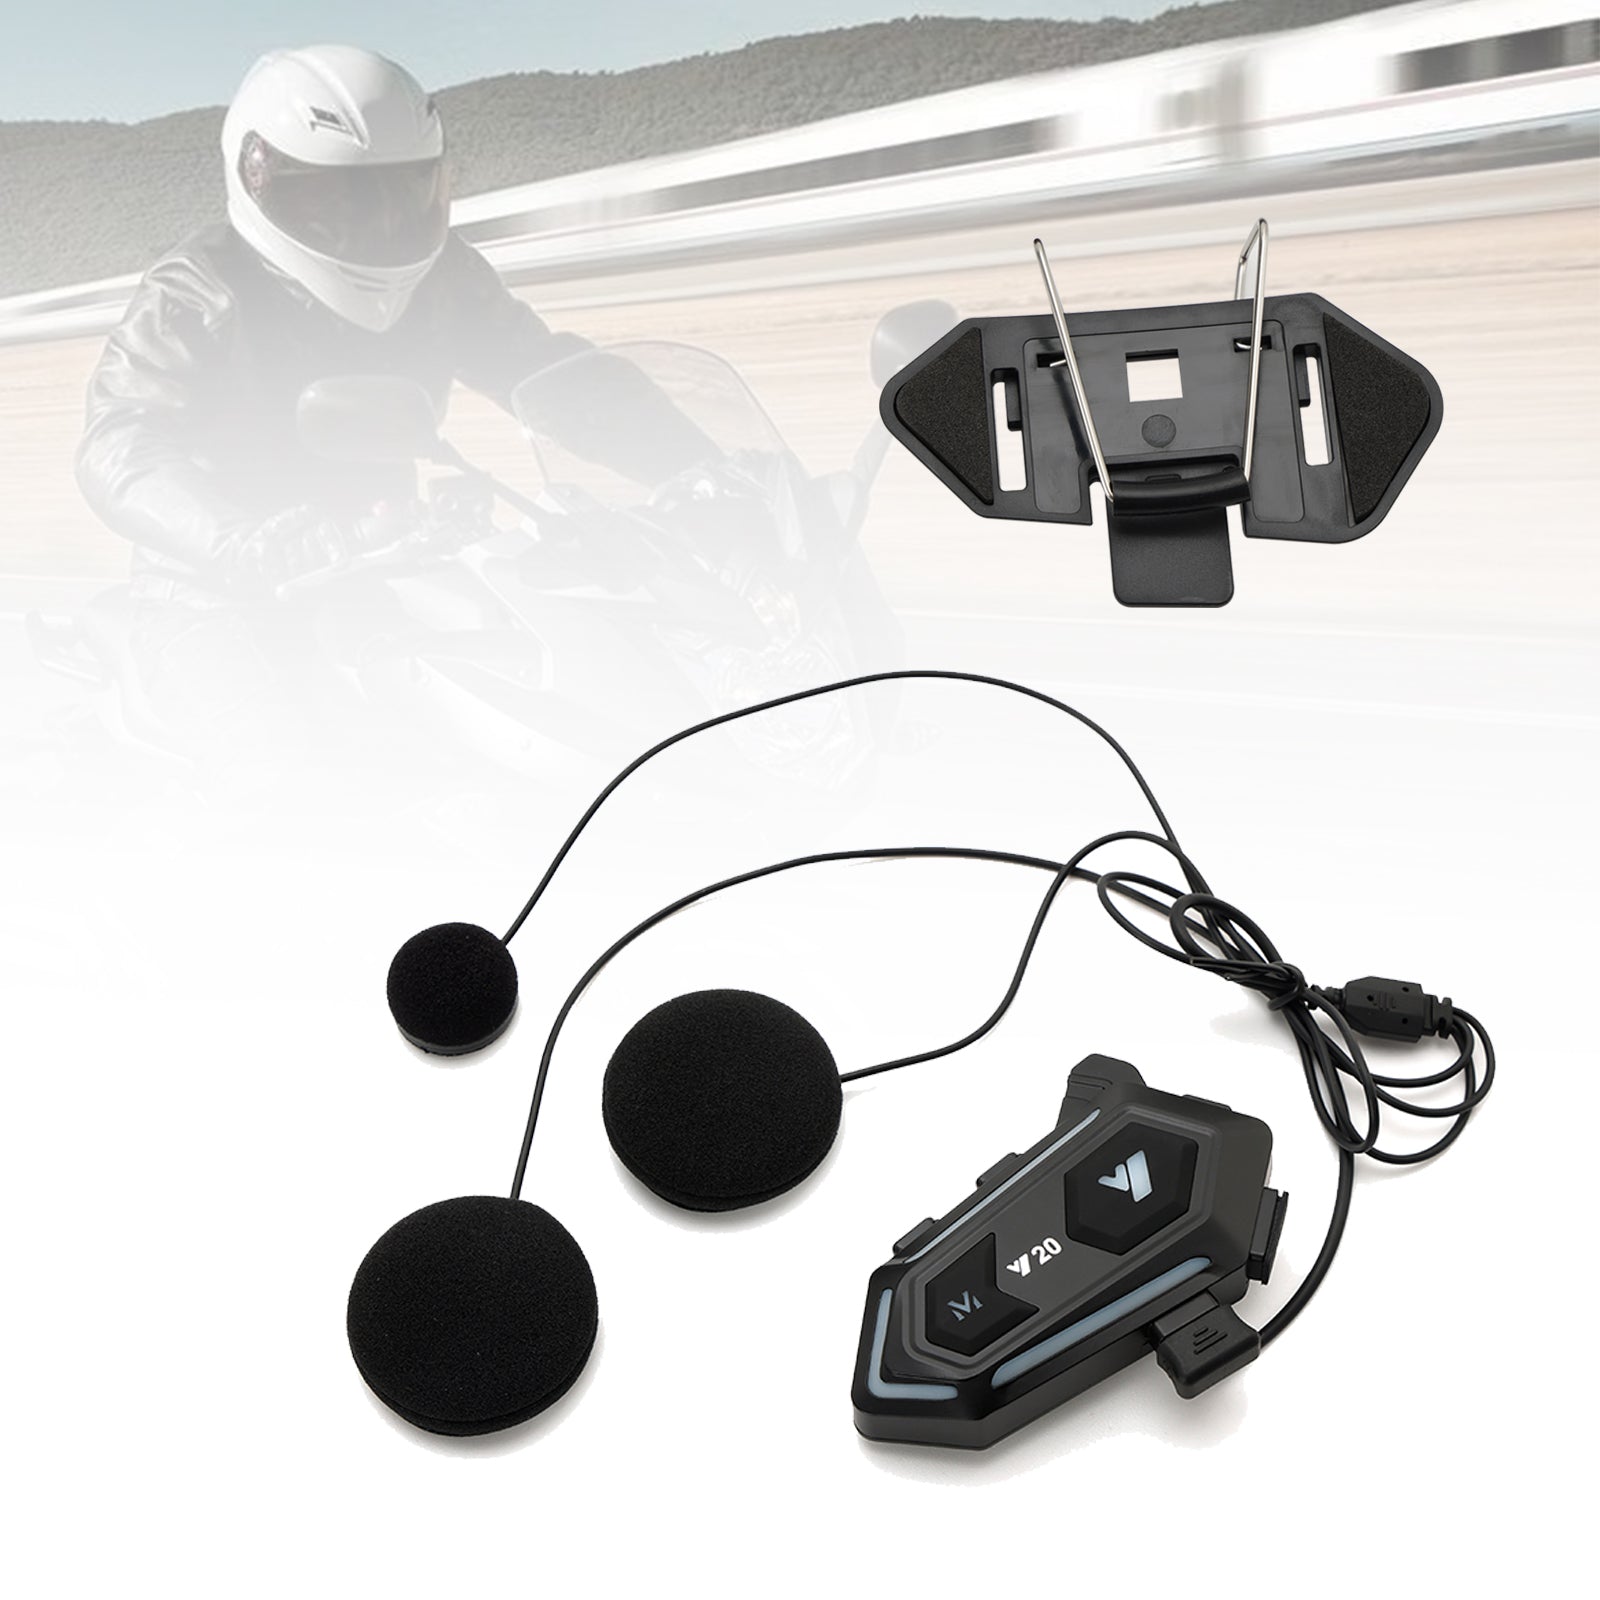 Universal Wireless Player Helmet Bluetooth Earphone Headset Y20 For Motorcycle